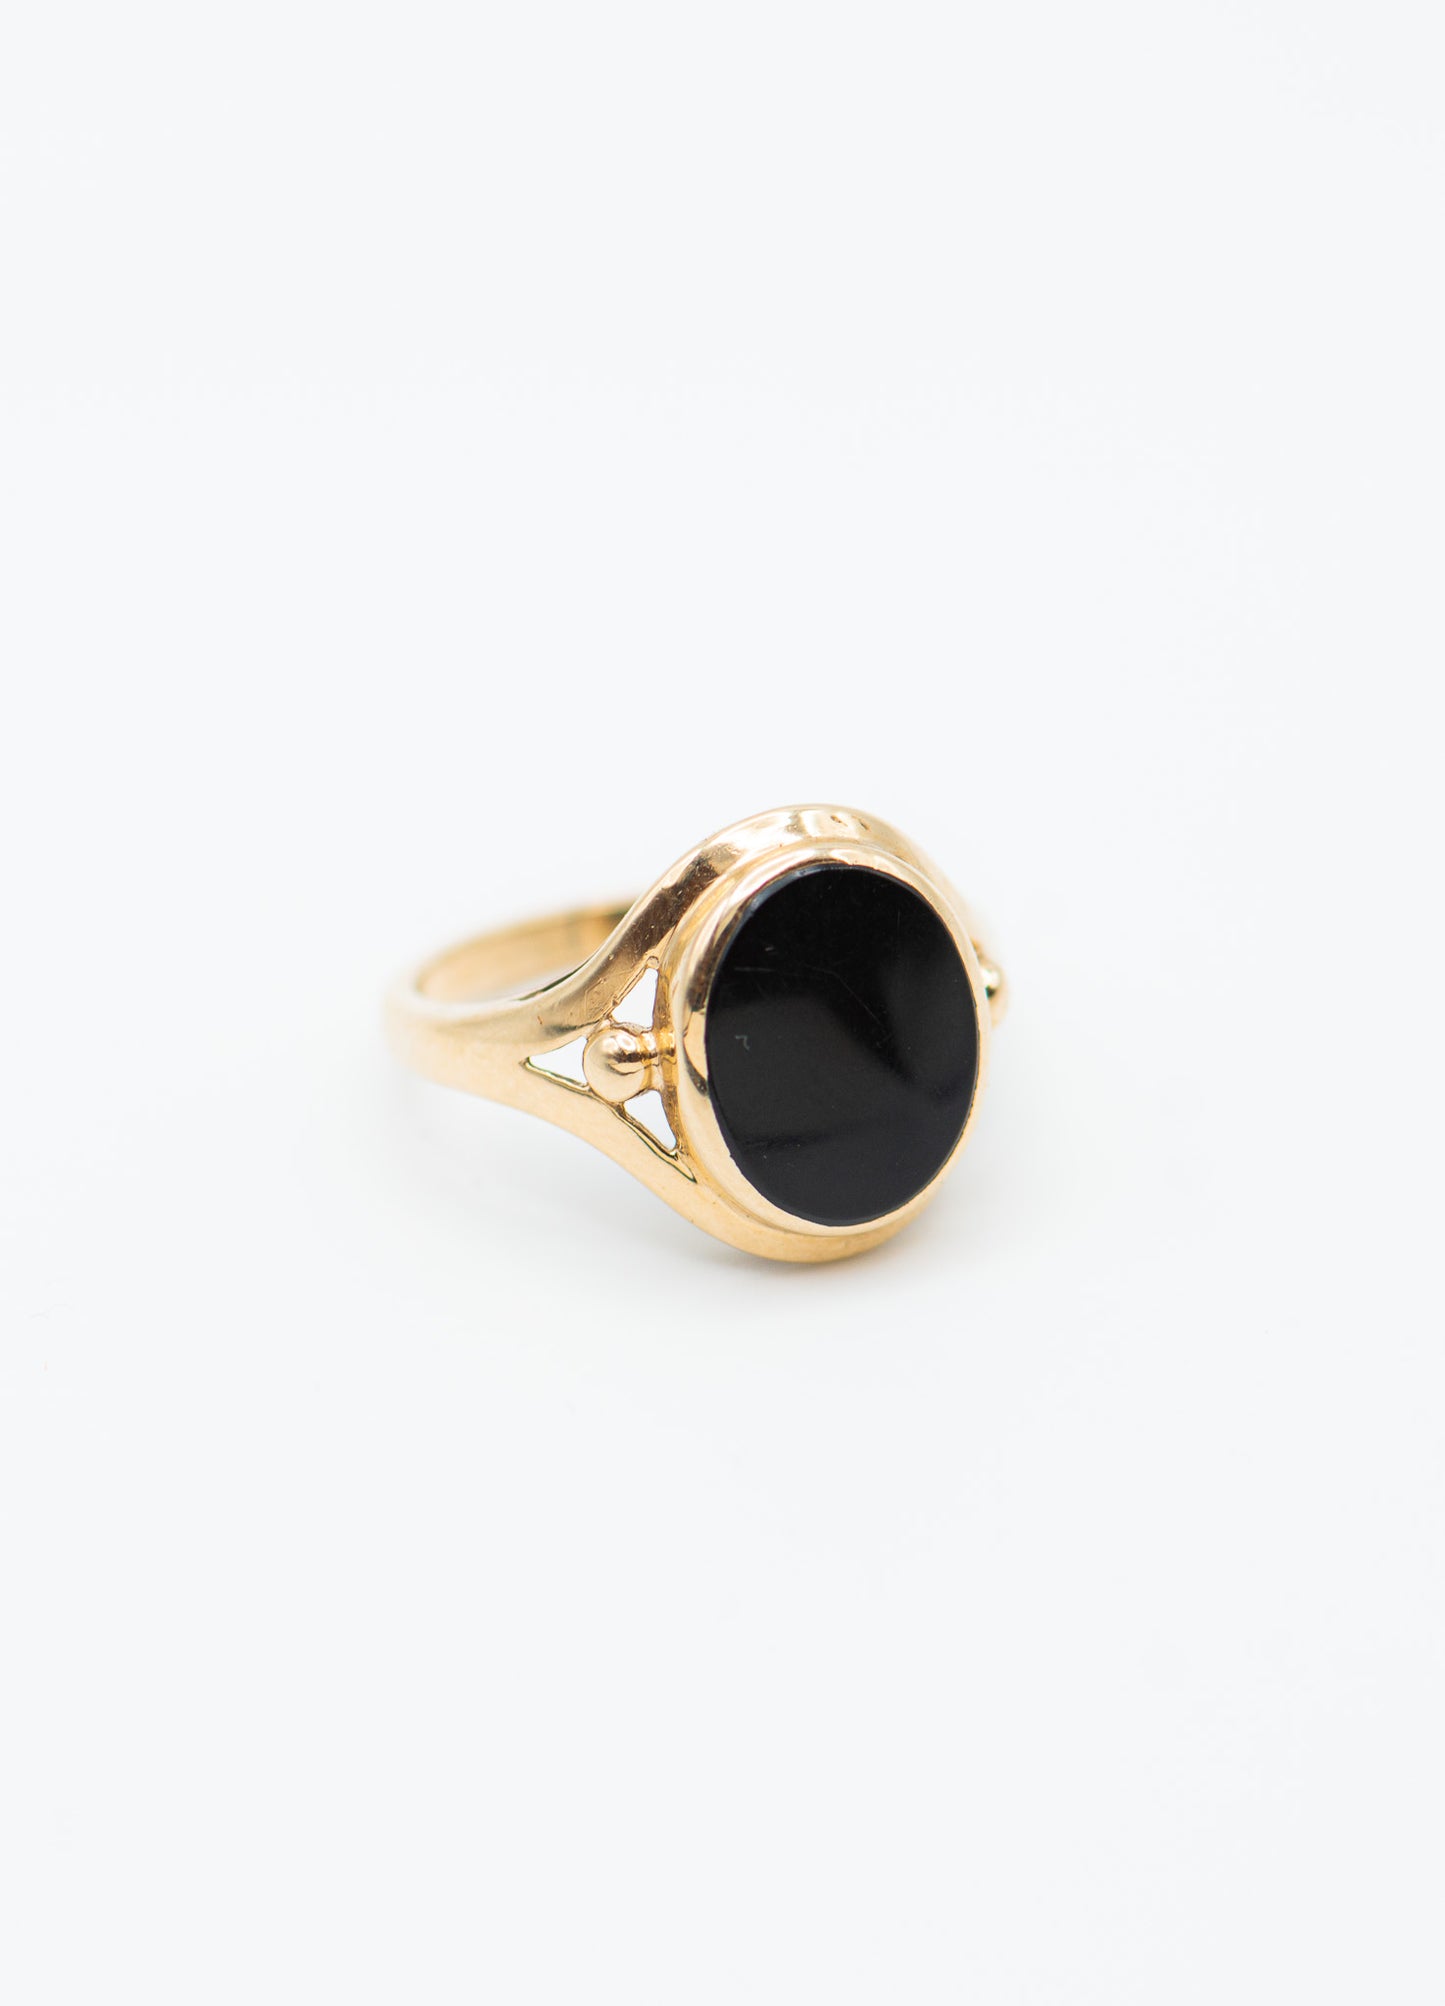 Vintage 1960's Onyx Ring